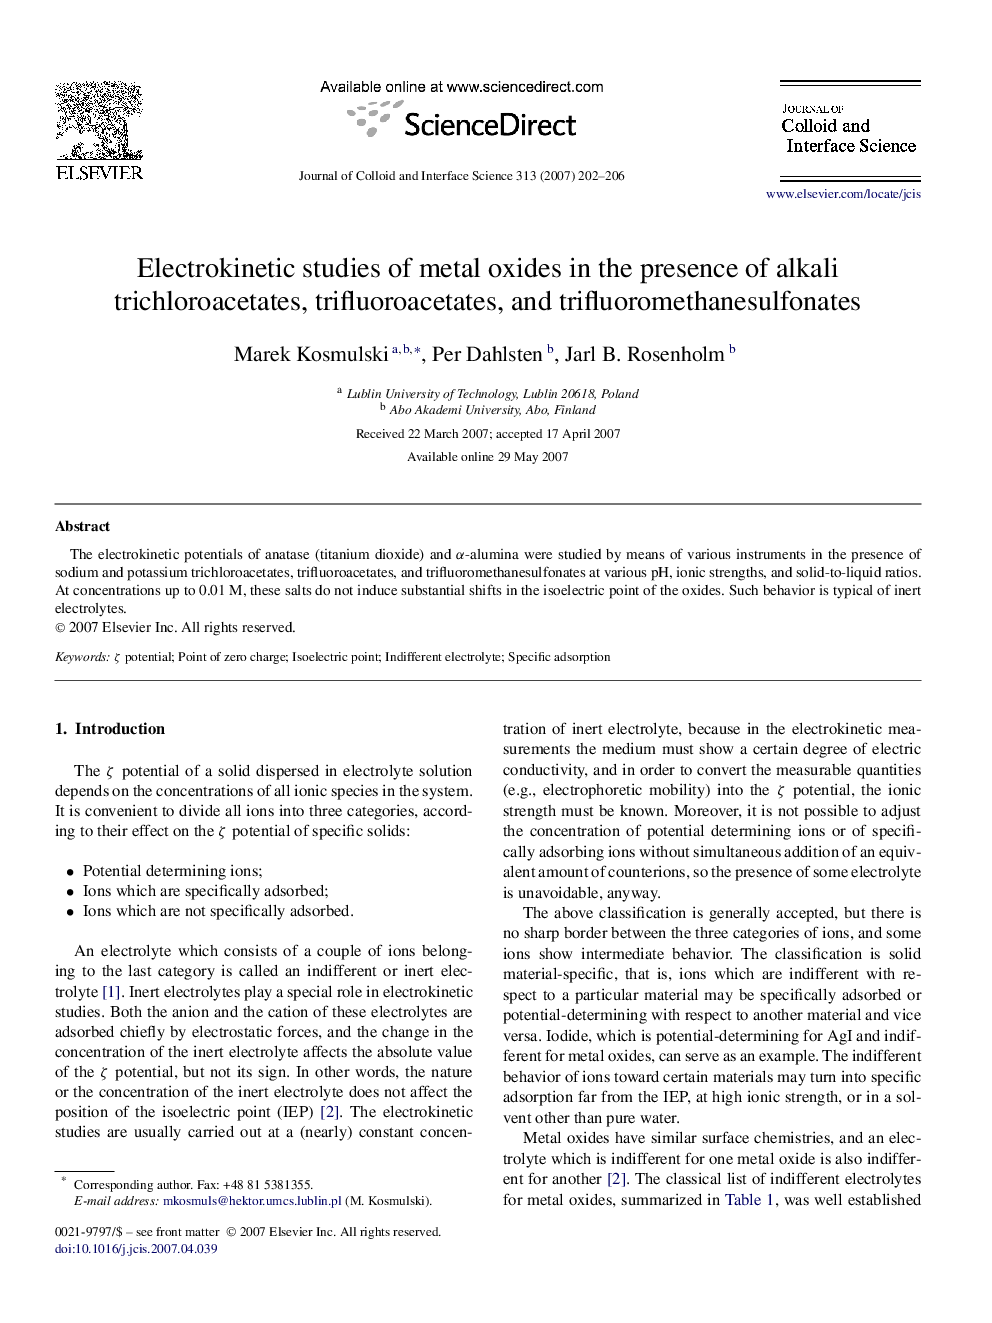 Electrokinetic studies of metal oxides in the presence of alkali trichloroacetates, trifluoroacetates, and trifluoromethanesulfonates